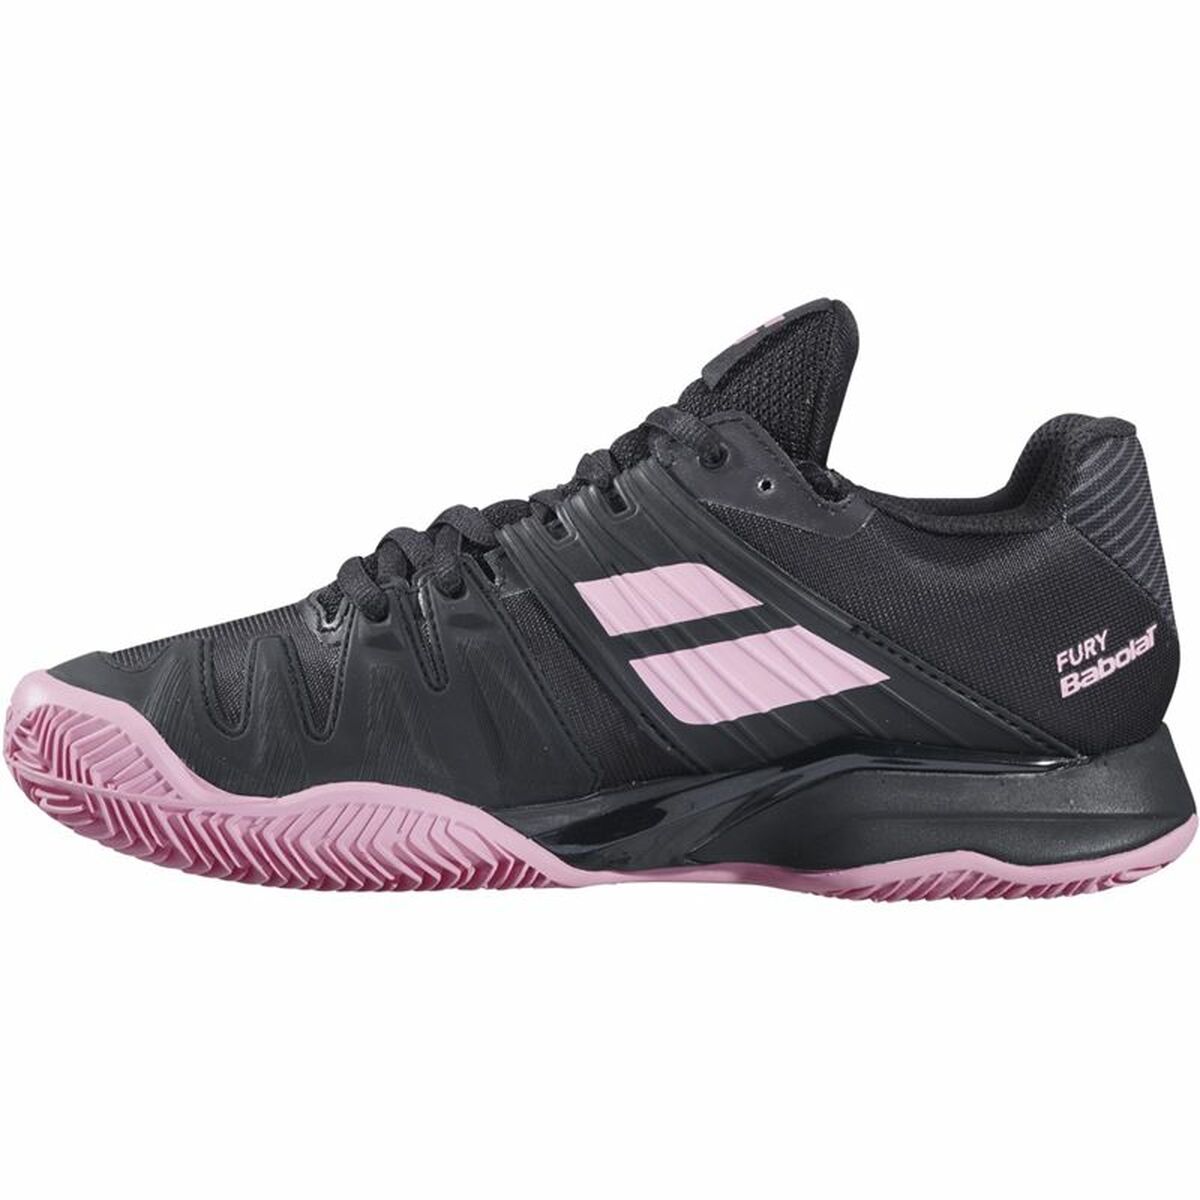 Women's Tennis Shoes Babolat Propulse Fury Lady Black